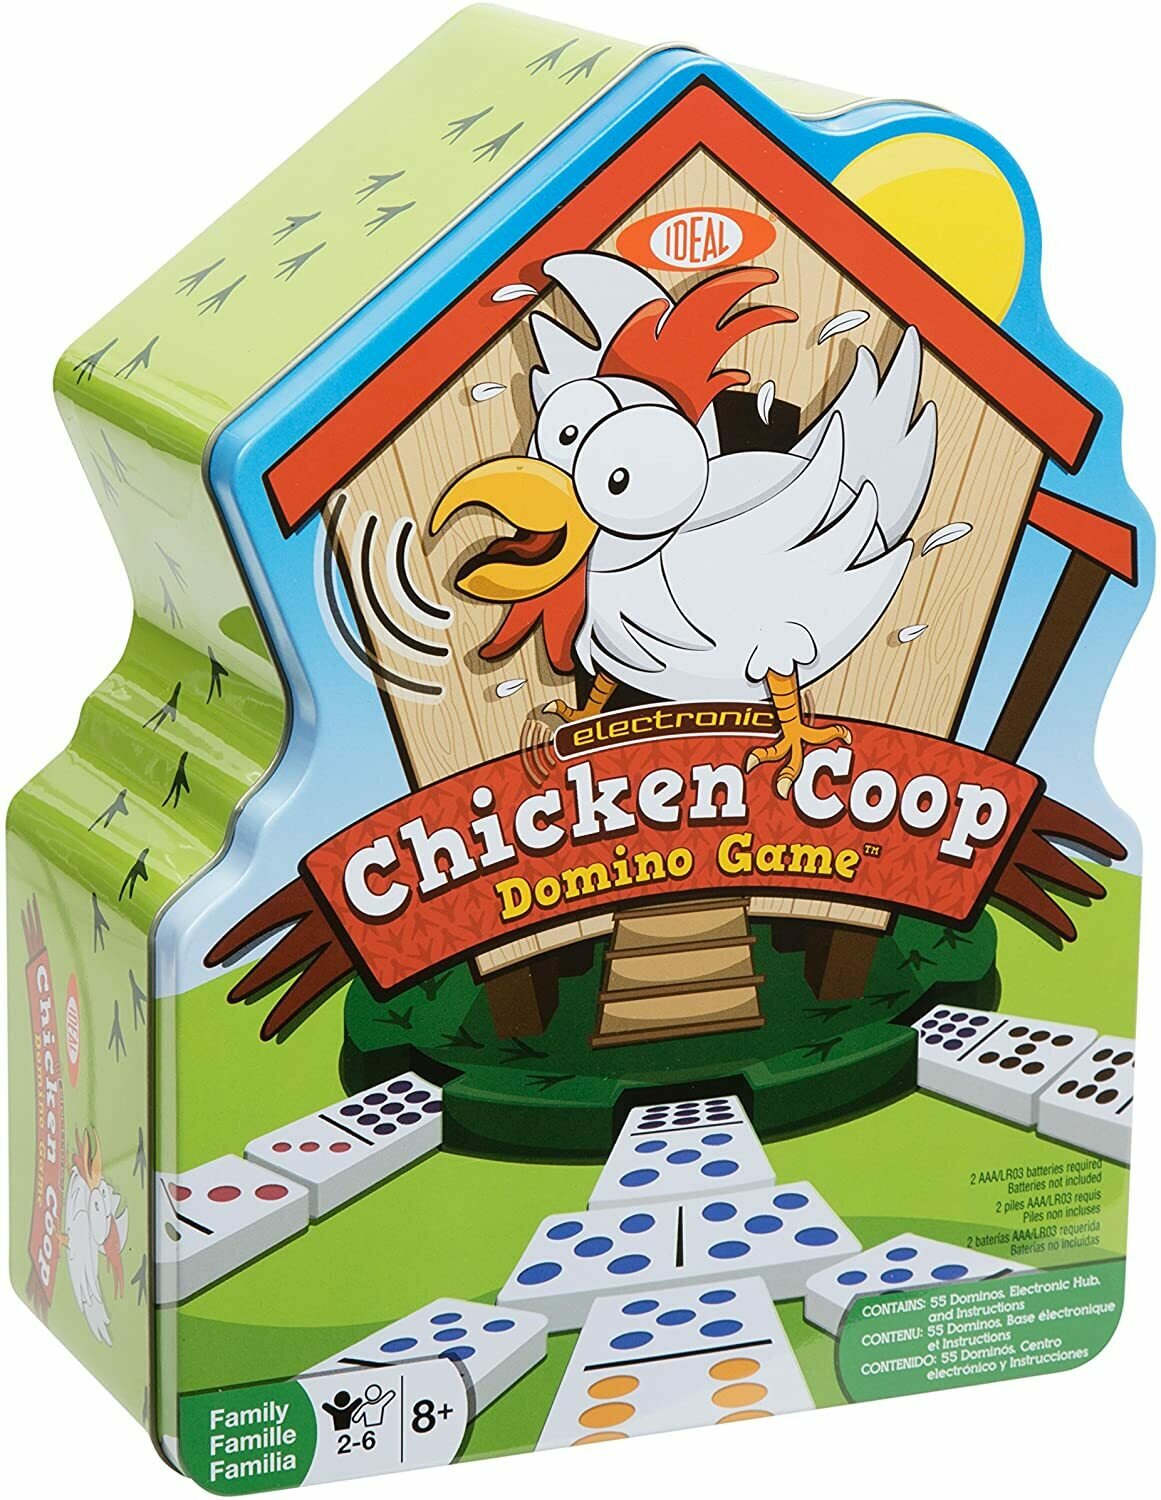 Chicken Coop Domino Game